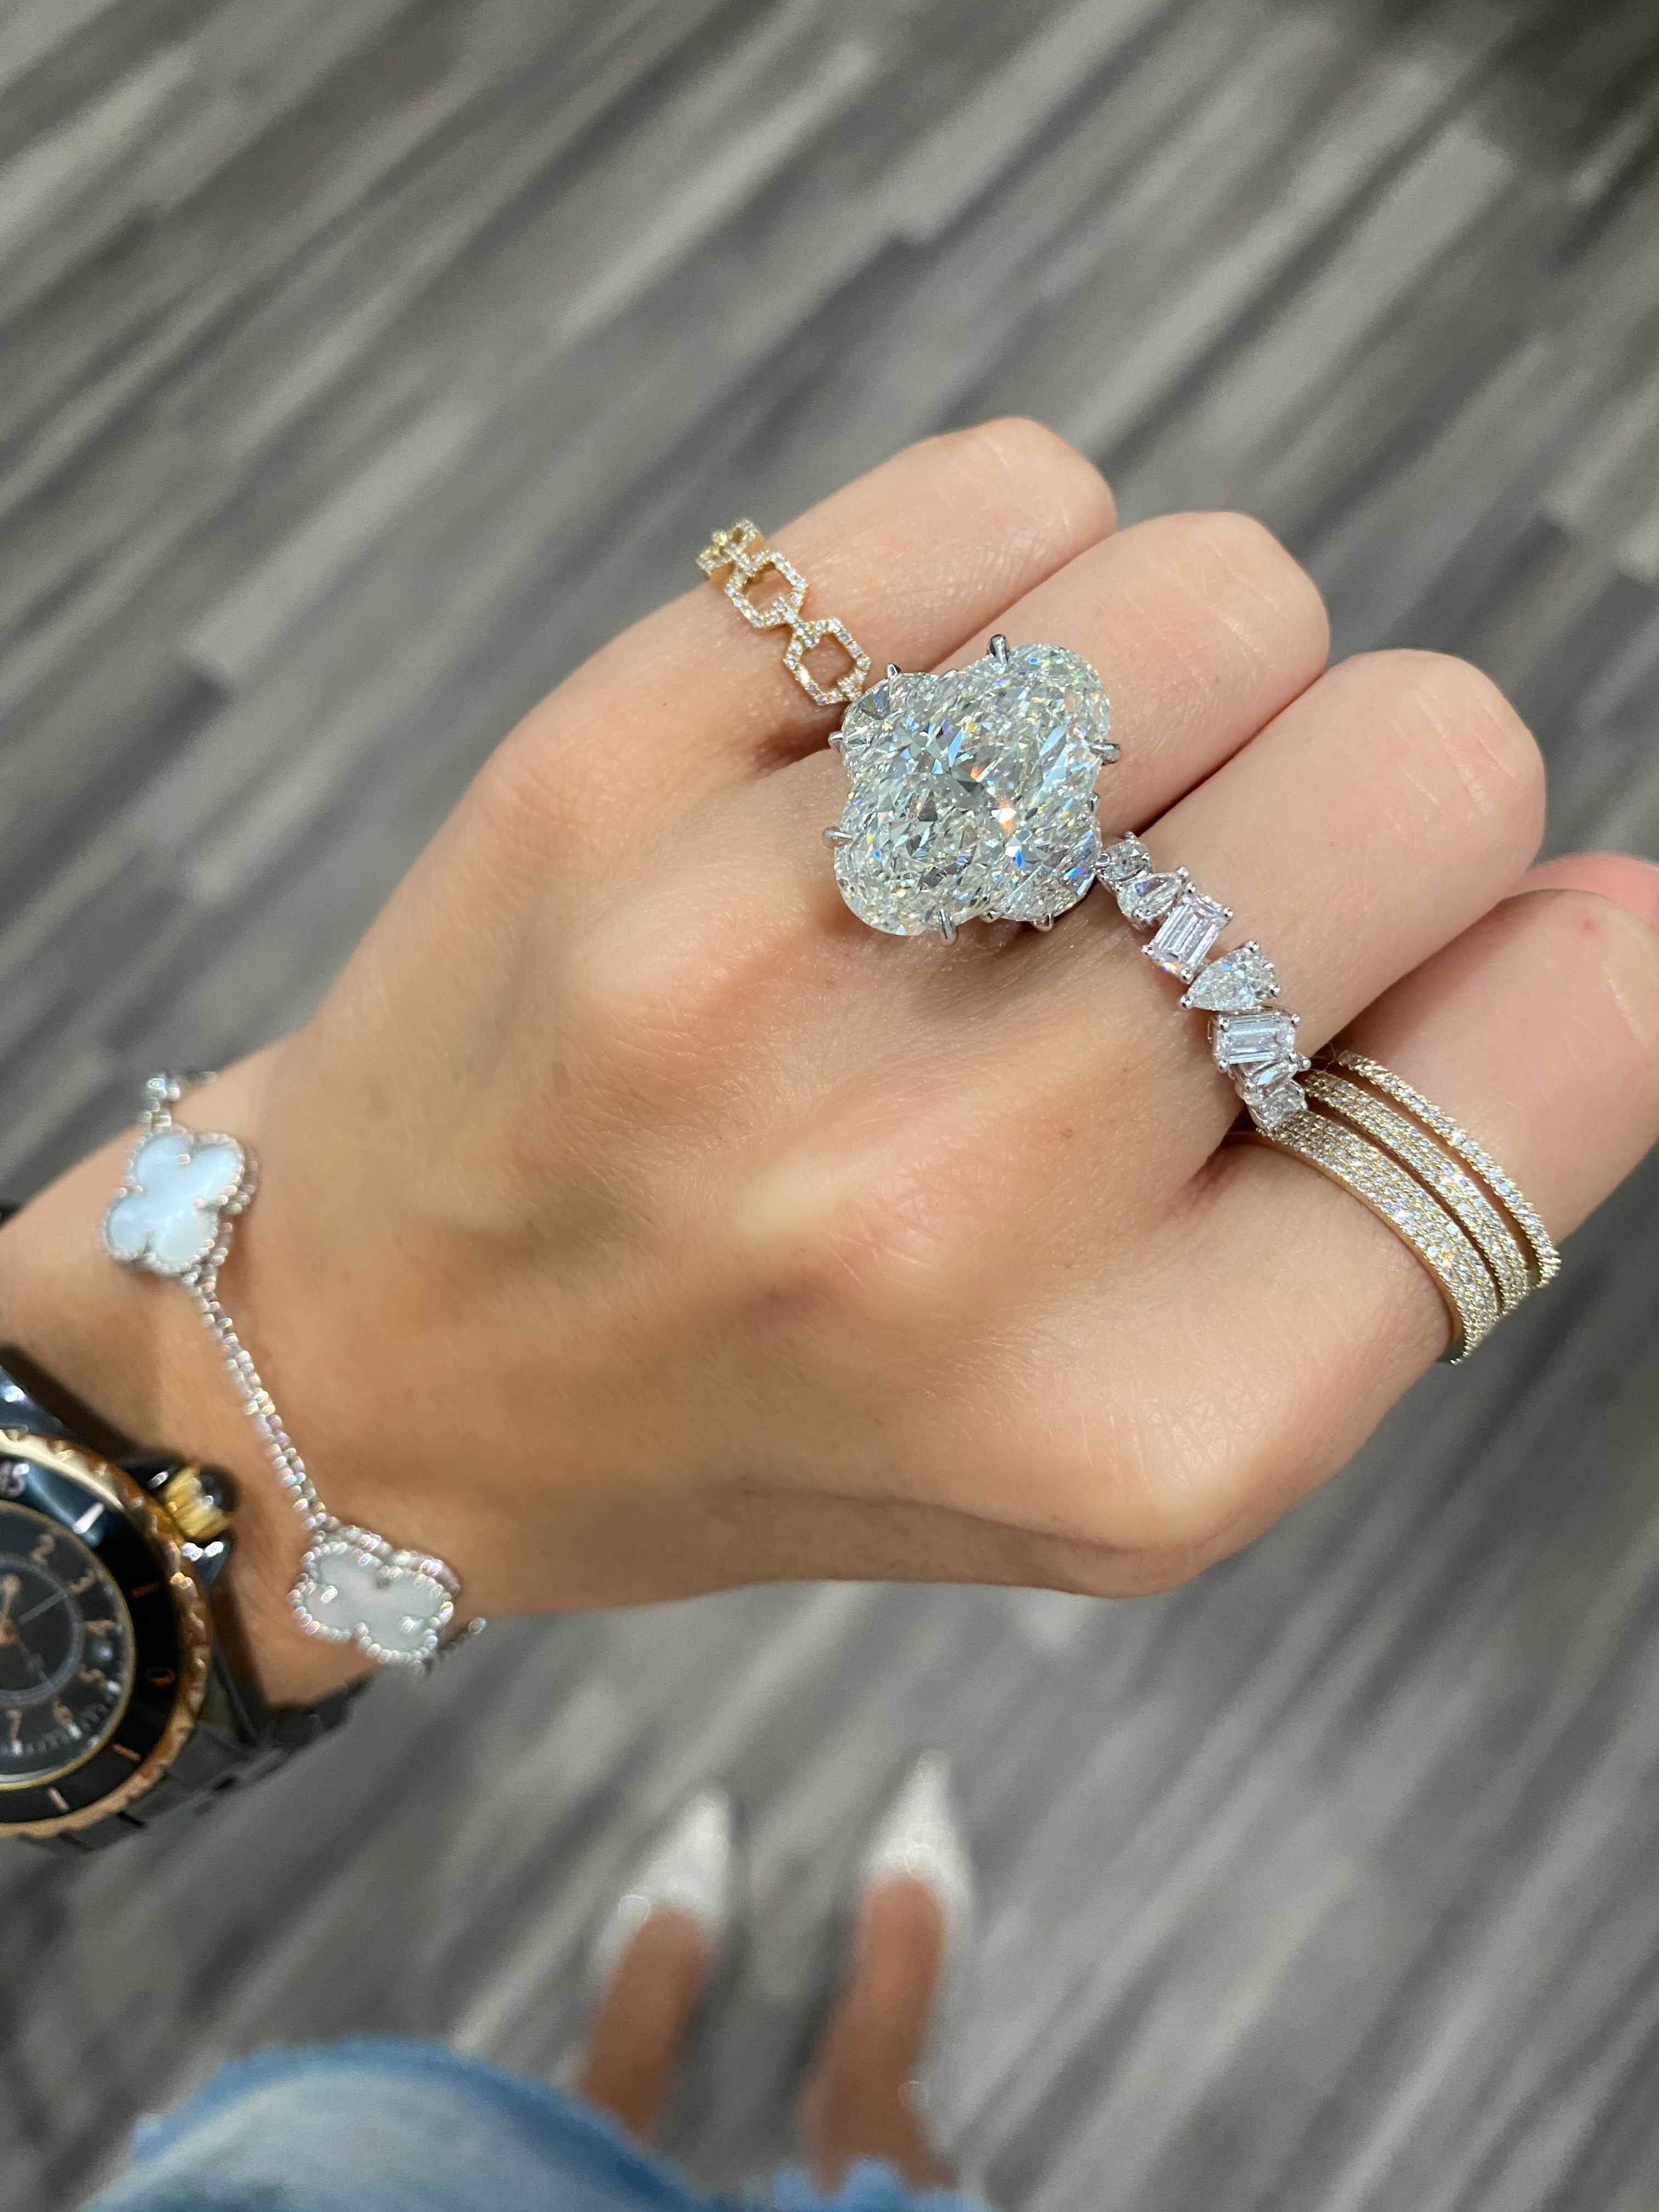 Stunning 10 Carat Diamond Ring that Set the Fashion Frenzy